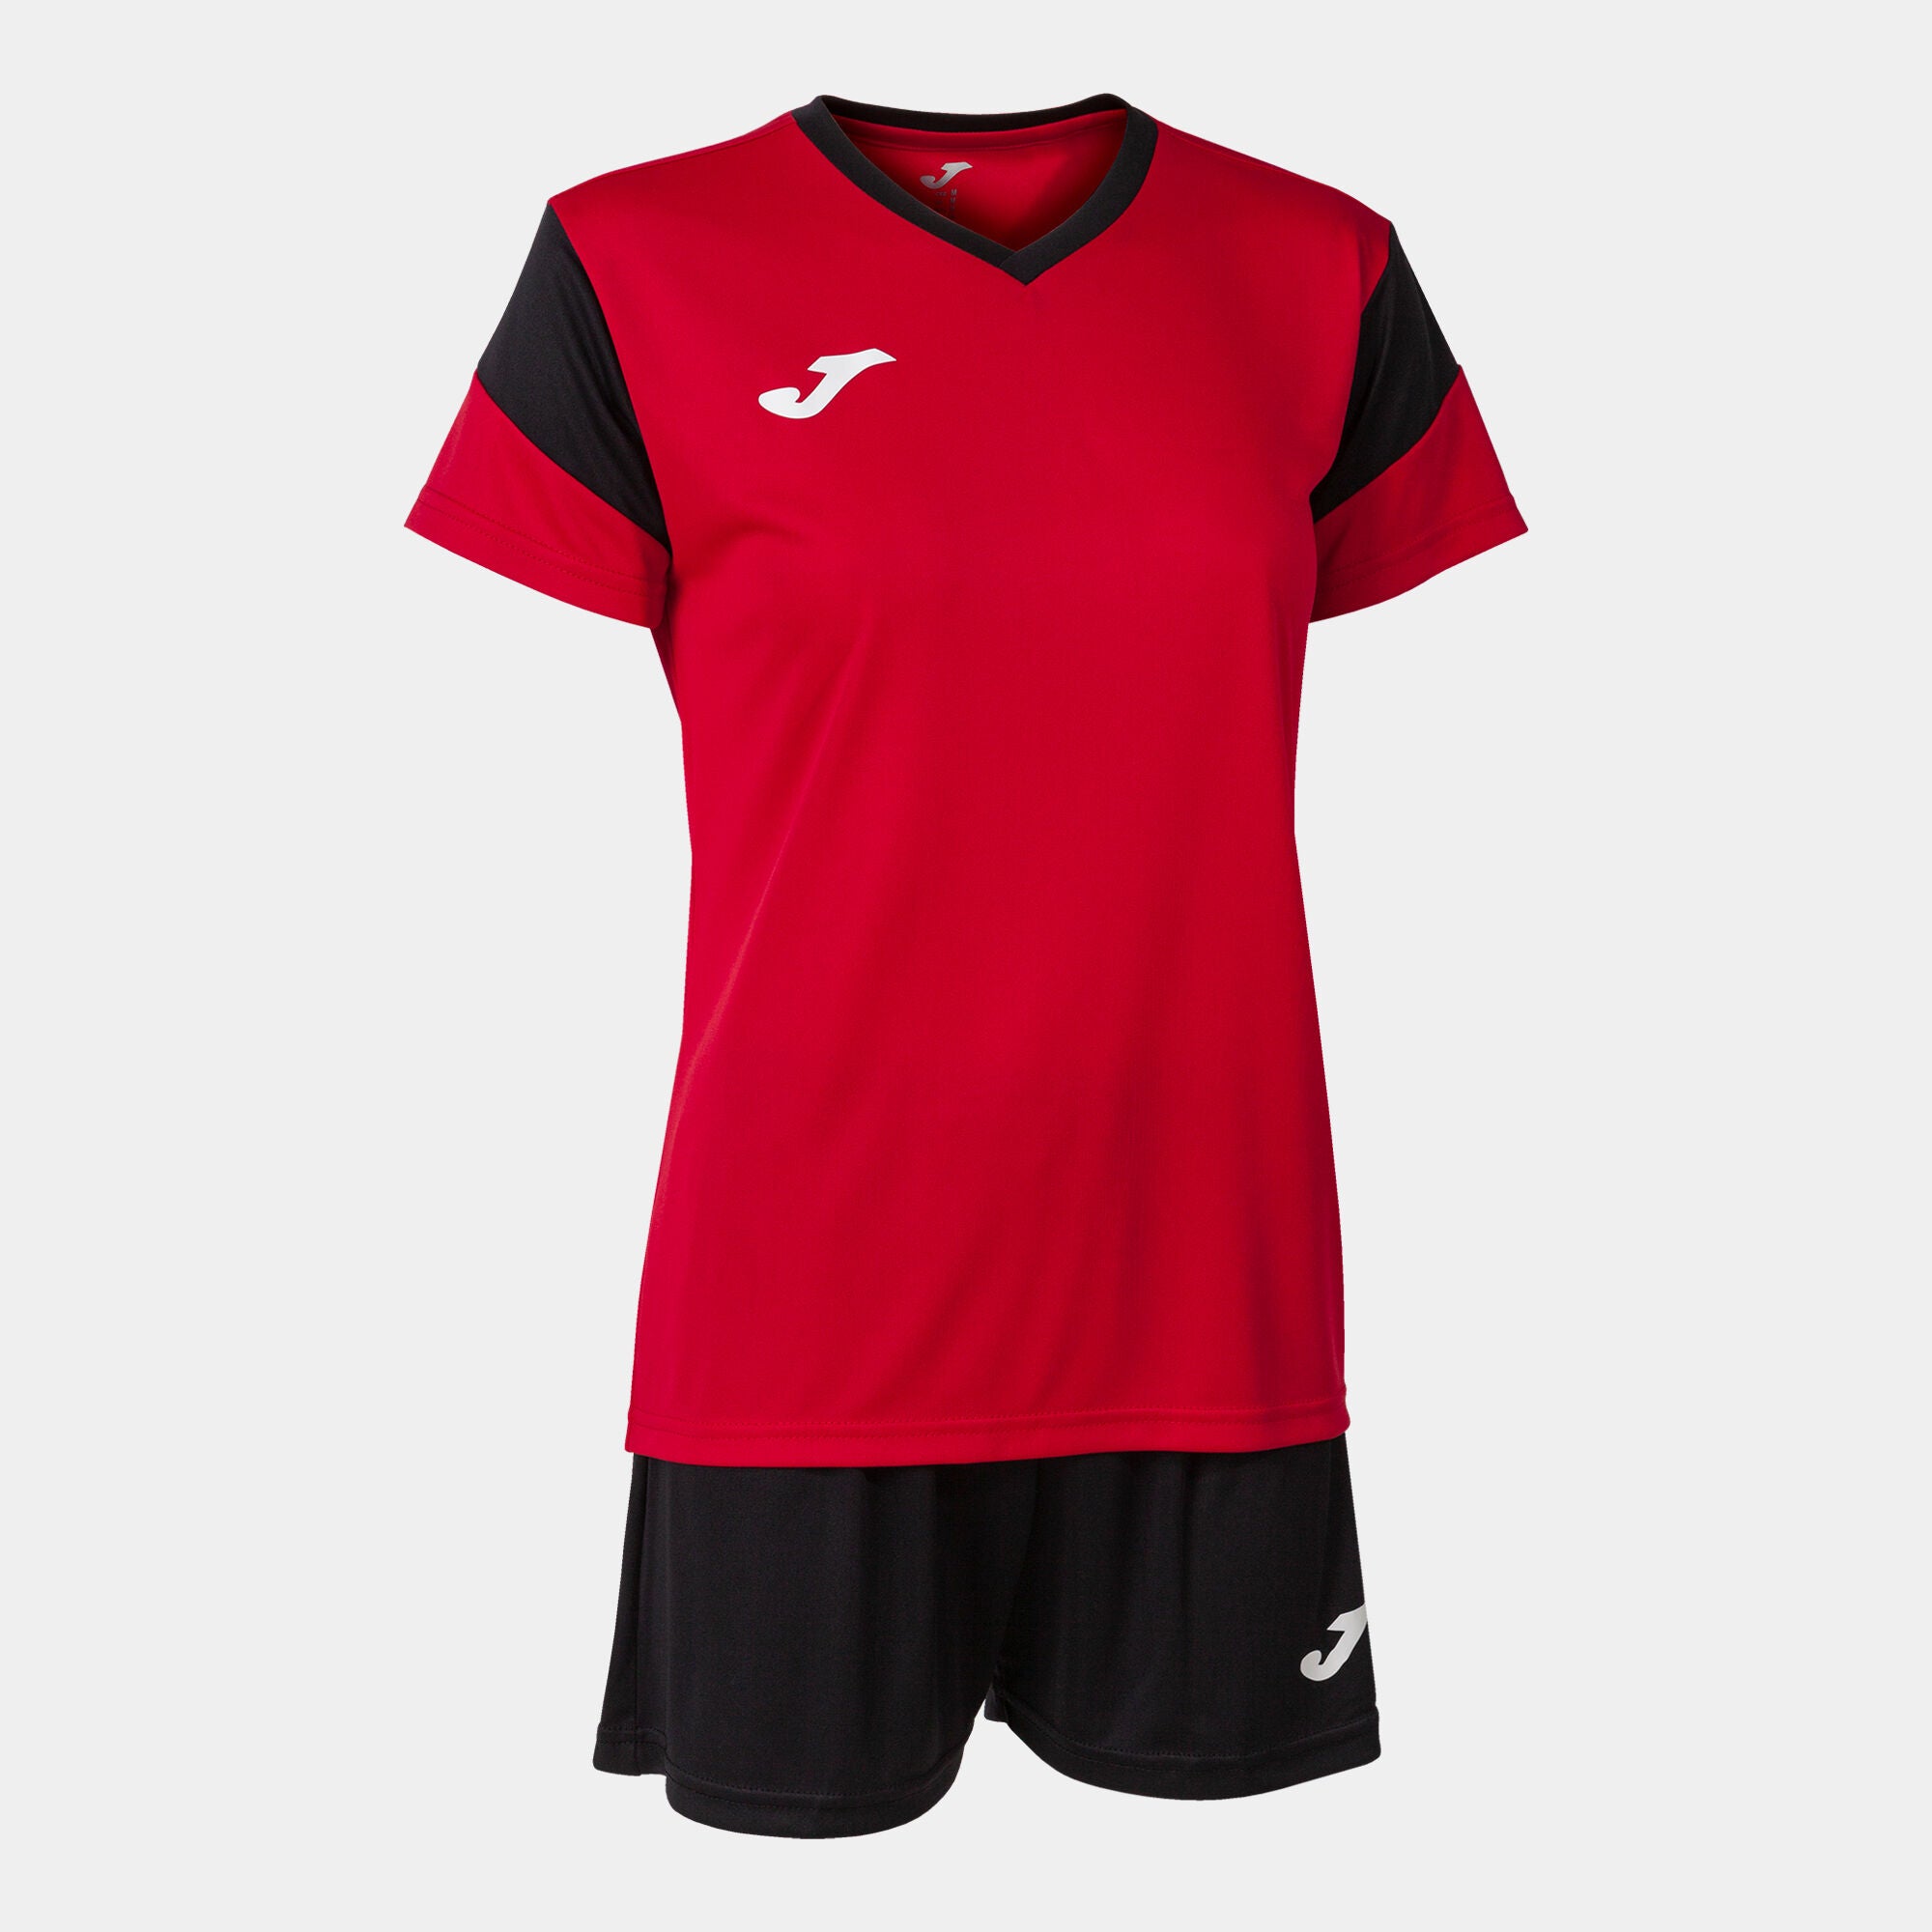 Joma Phoenix Activewear T-shirt & Short Set Ladies-2372 Red Black